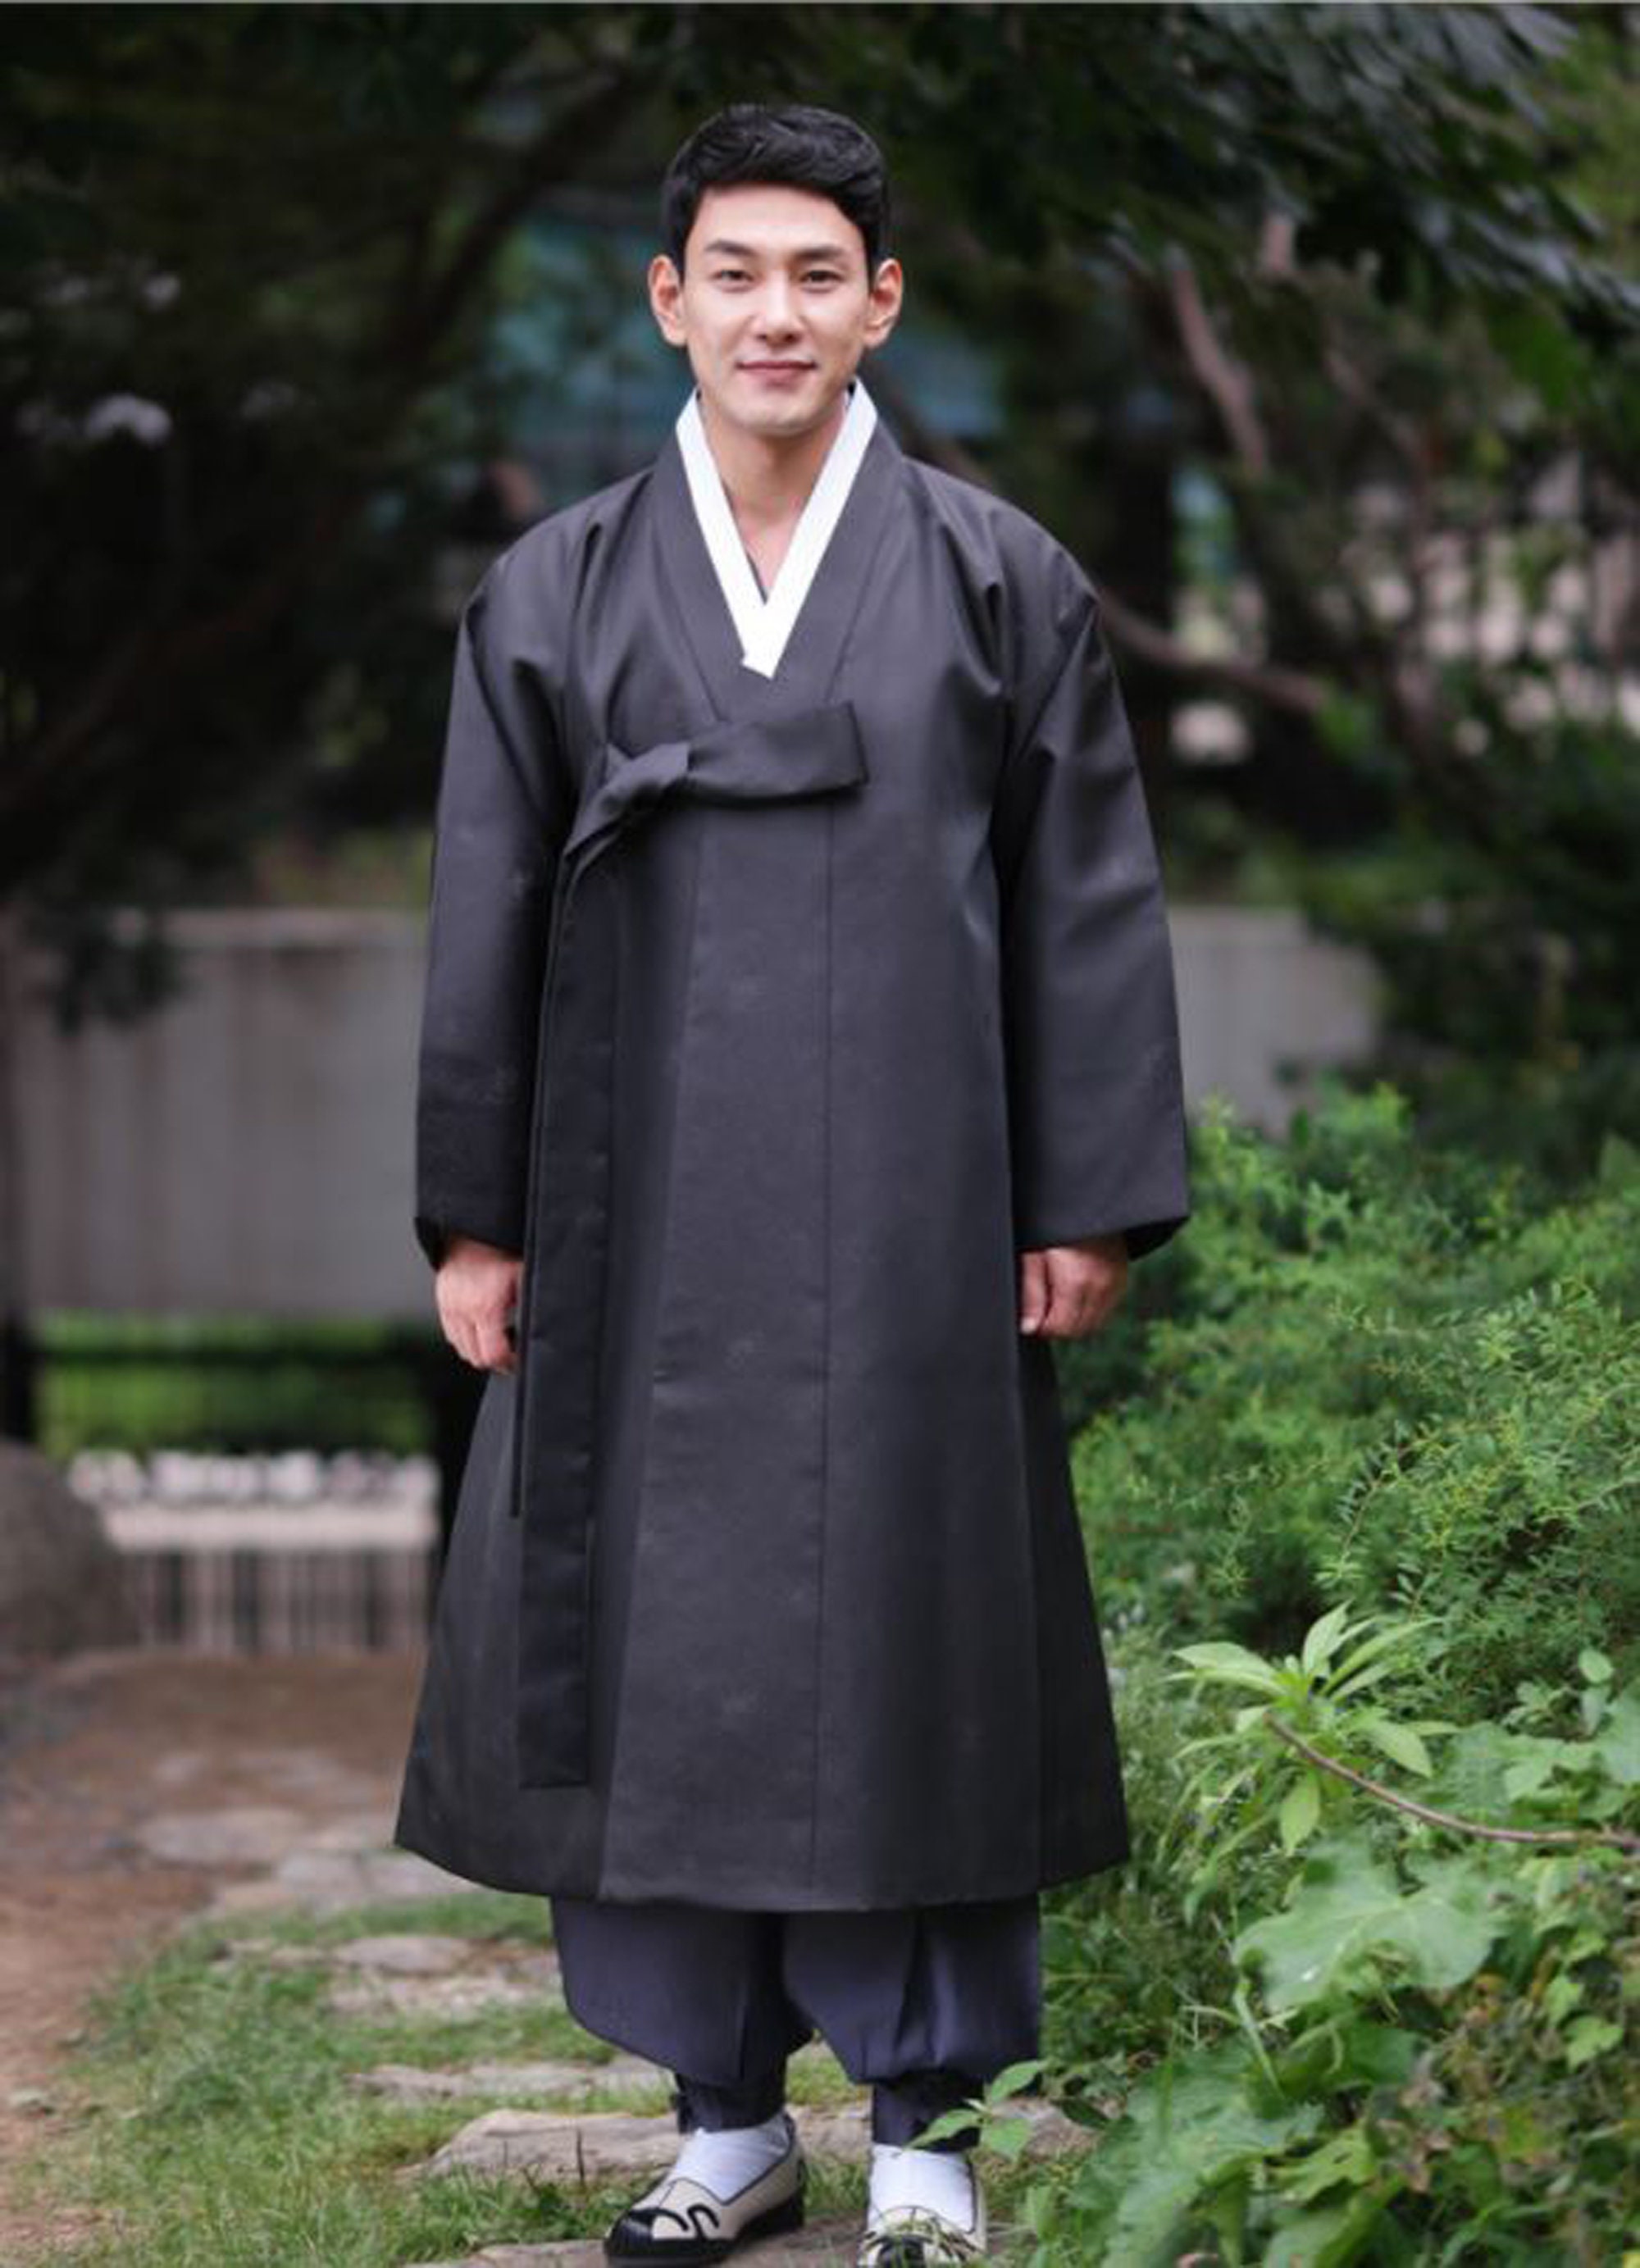 Hanbok Coat Outer Durumagi 두루마기 Man Traditional Clothing | Etsy